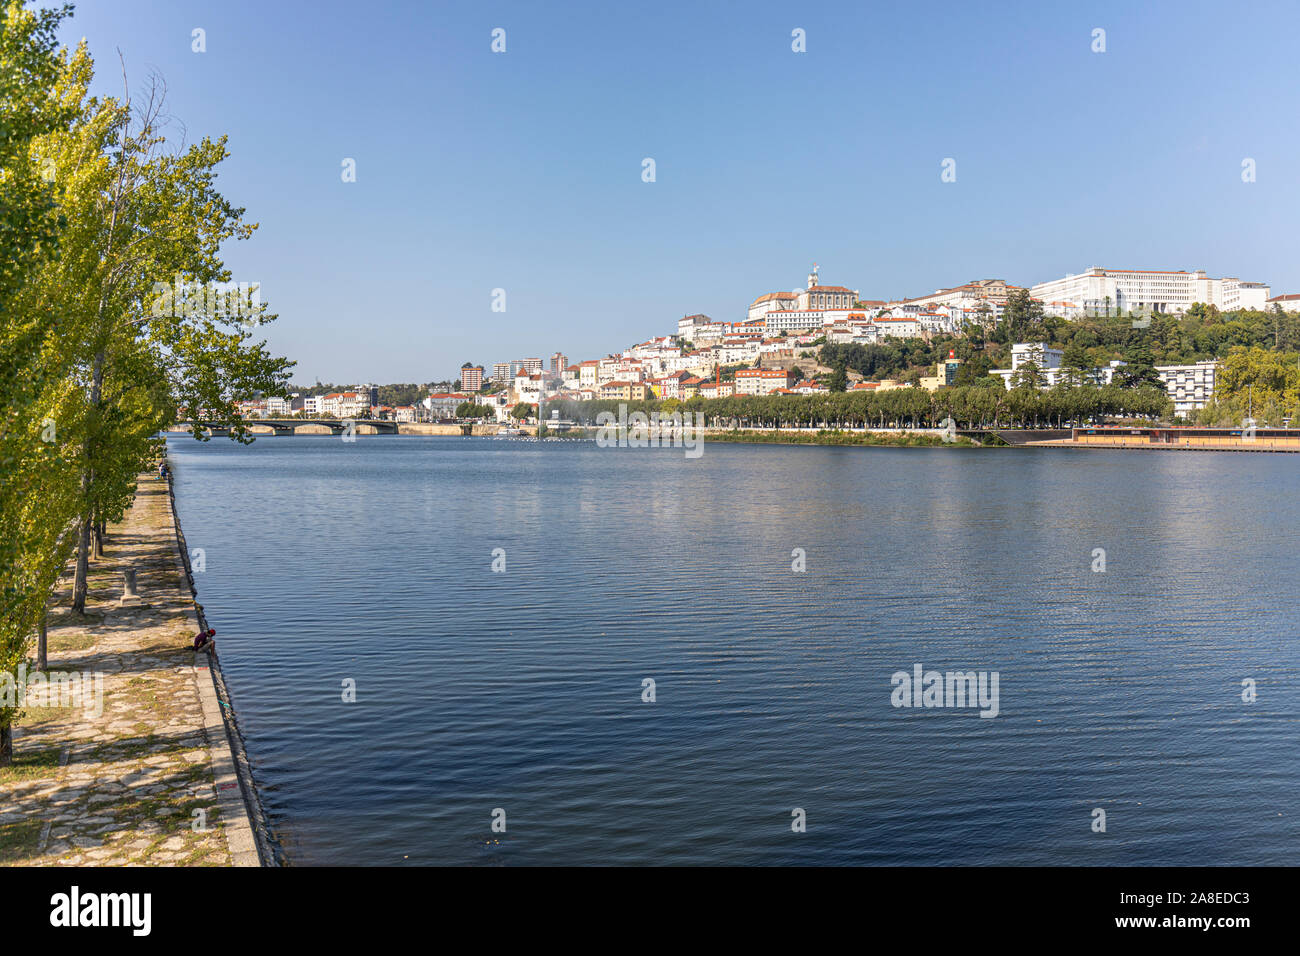 The Mondego River, University Town of Coimbra, Portugal Stock Photo